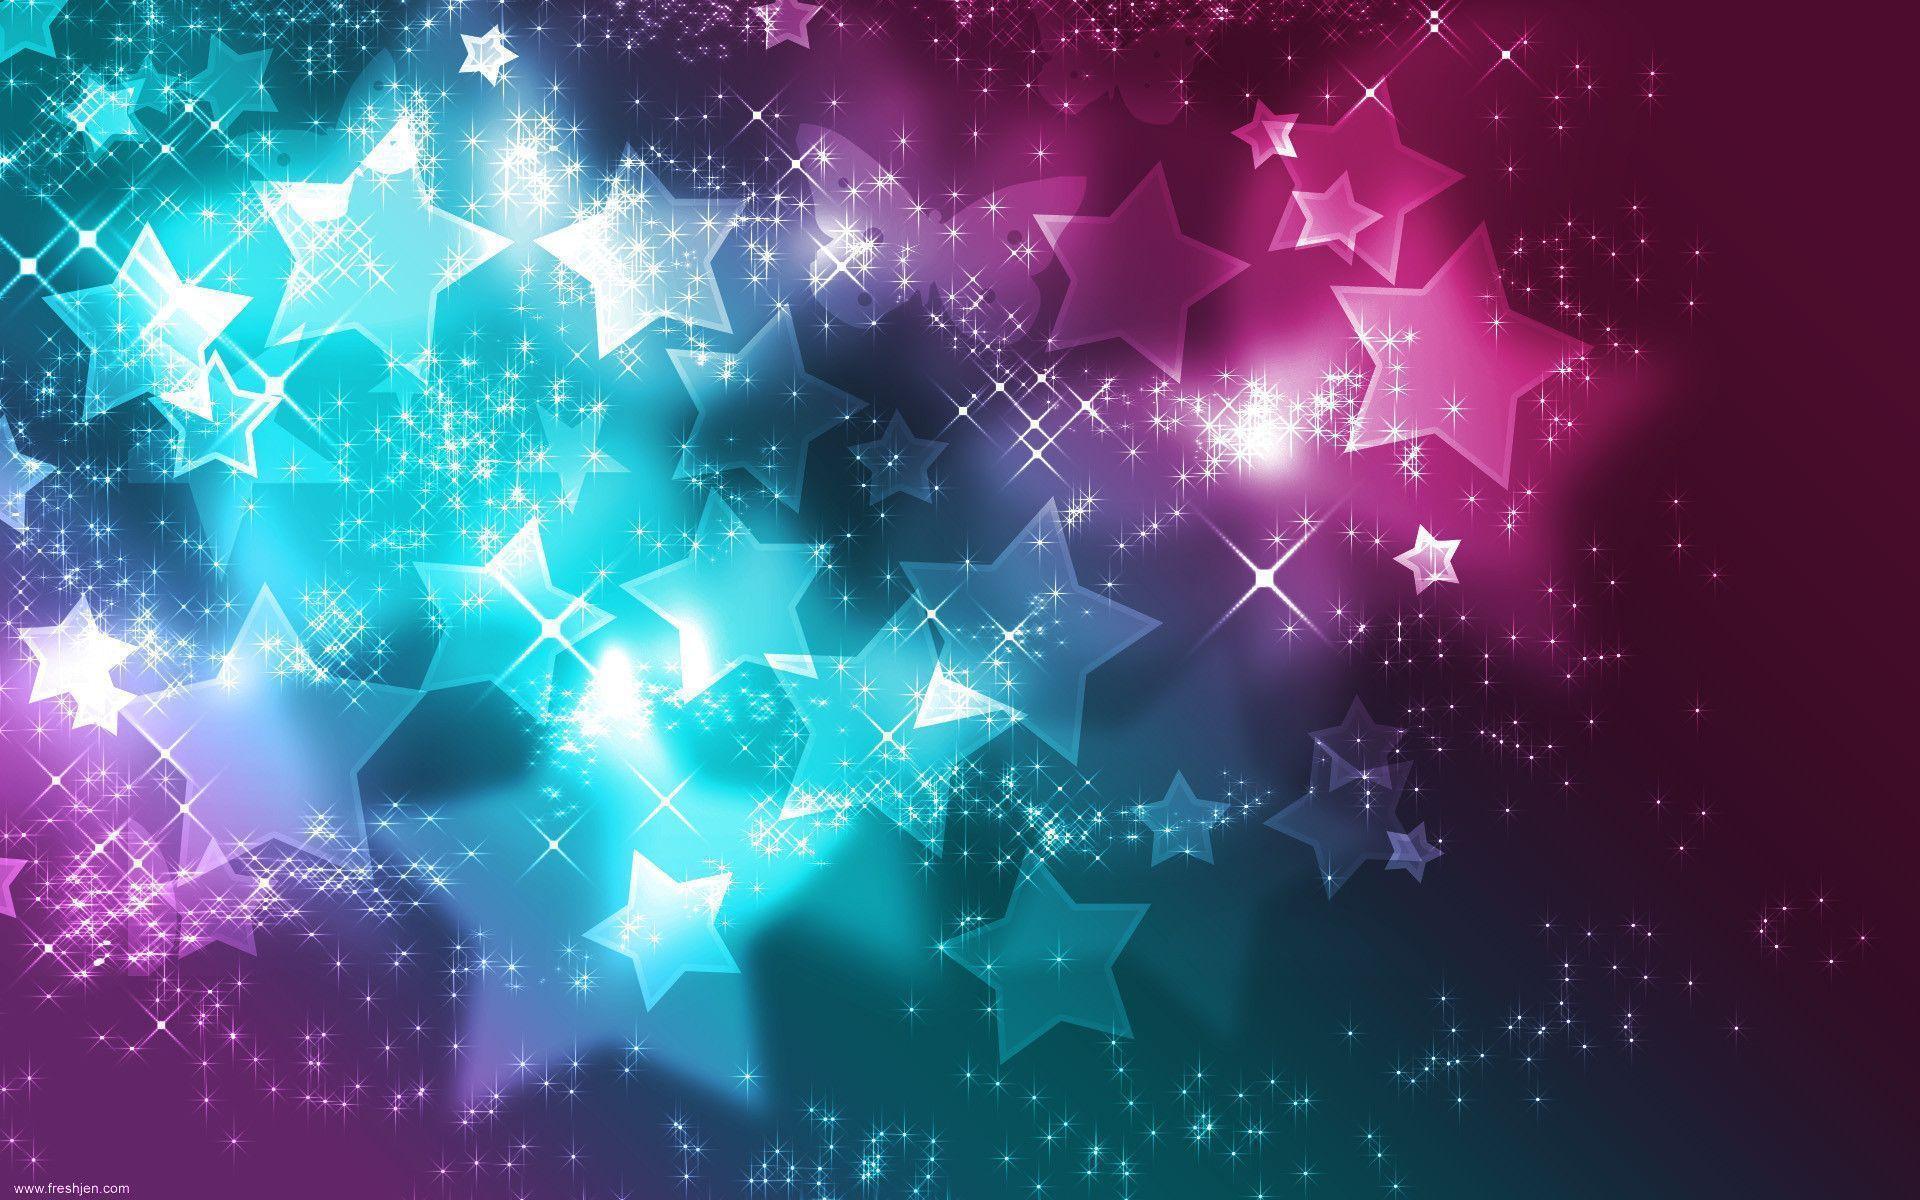 Sparkly Stars wallpaper